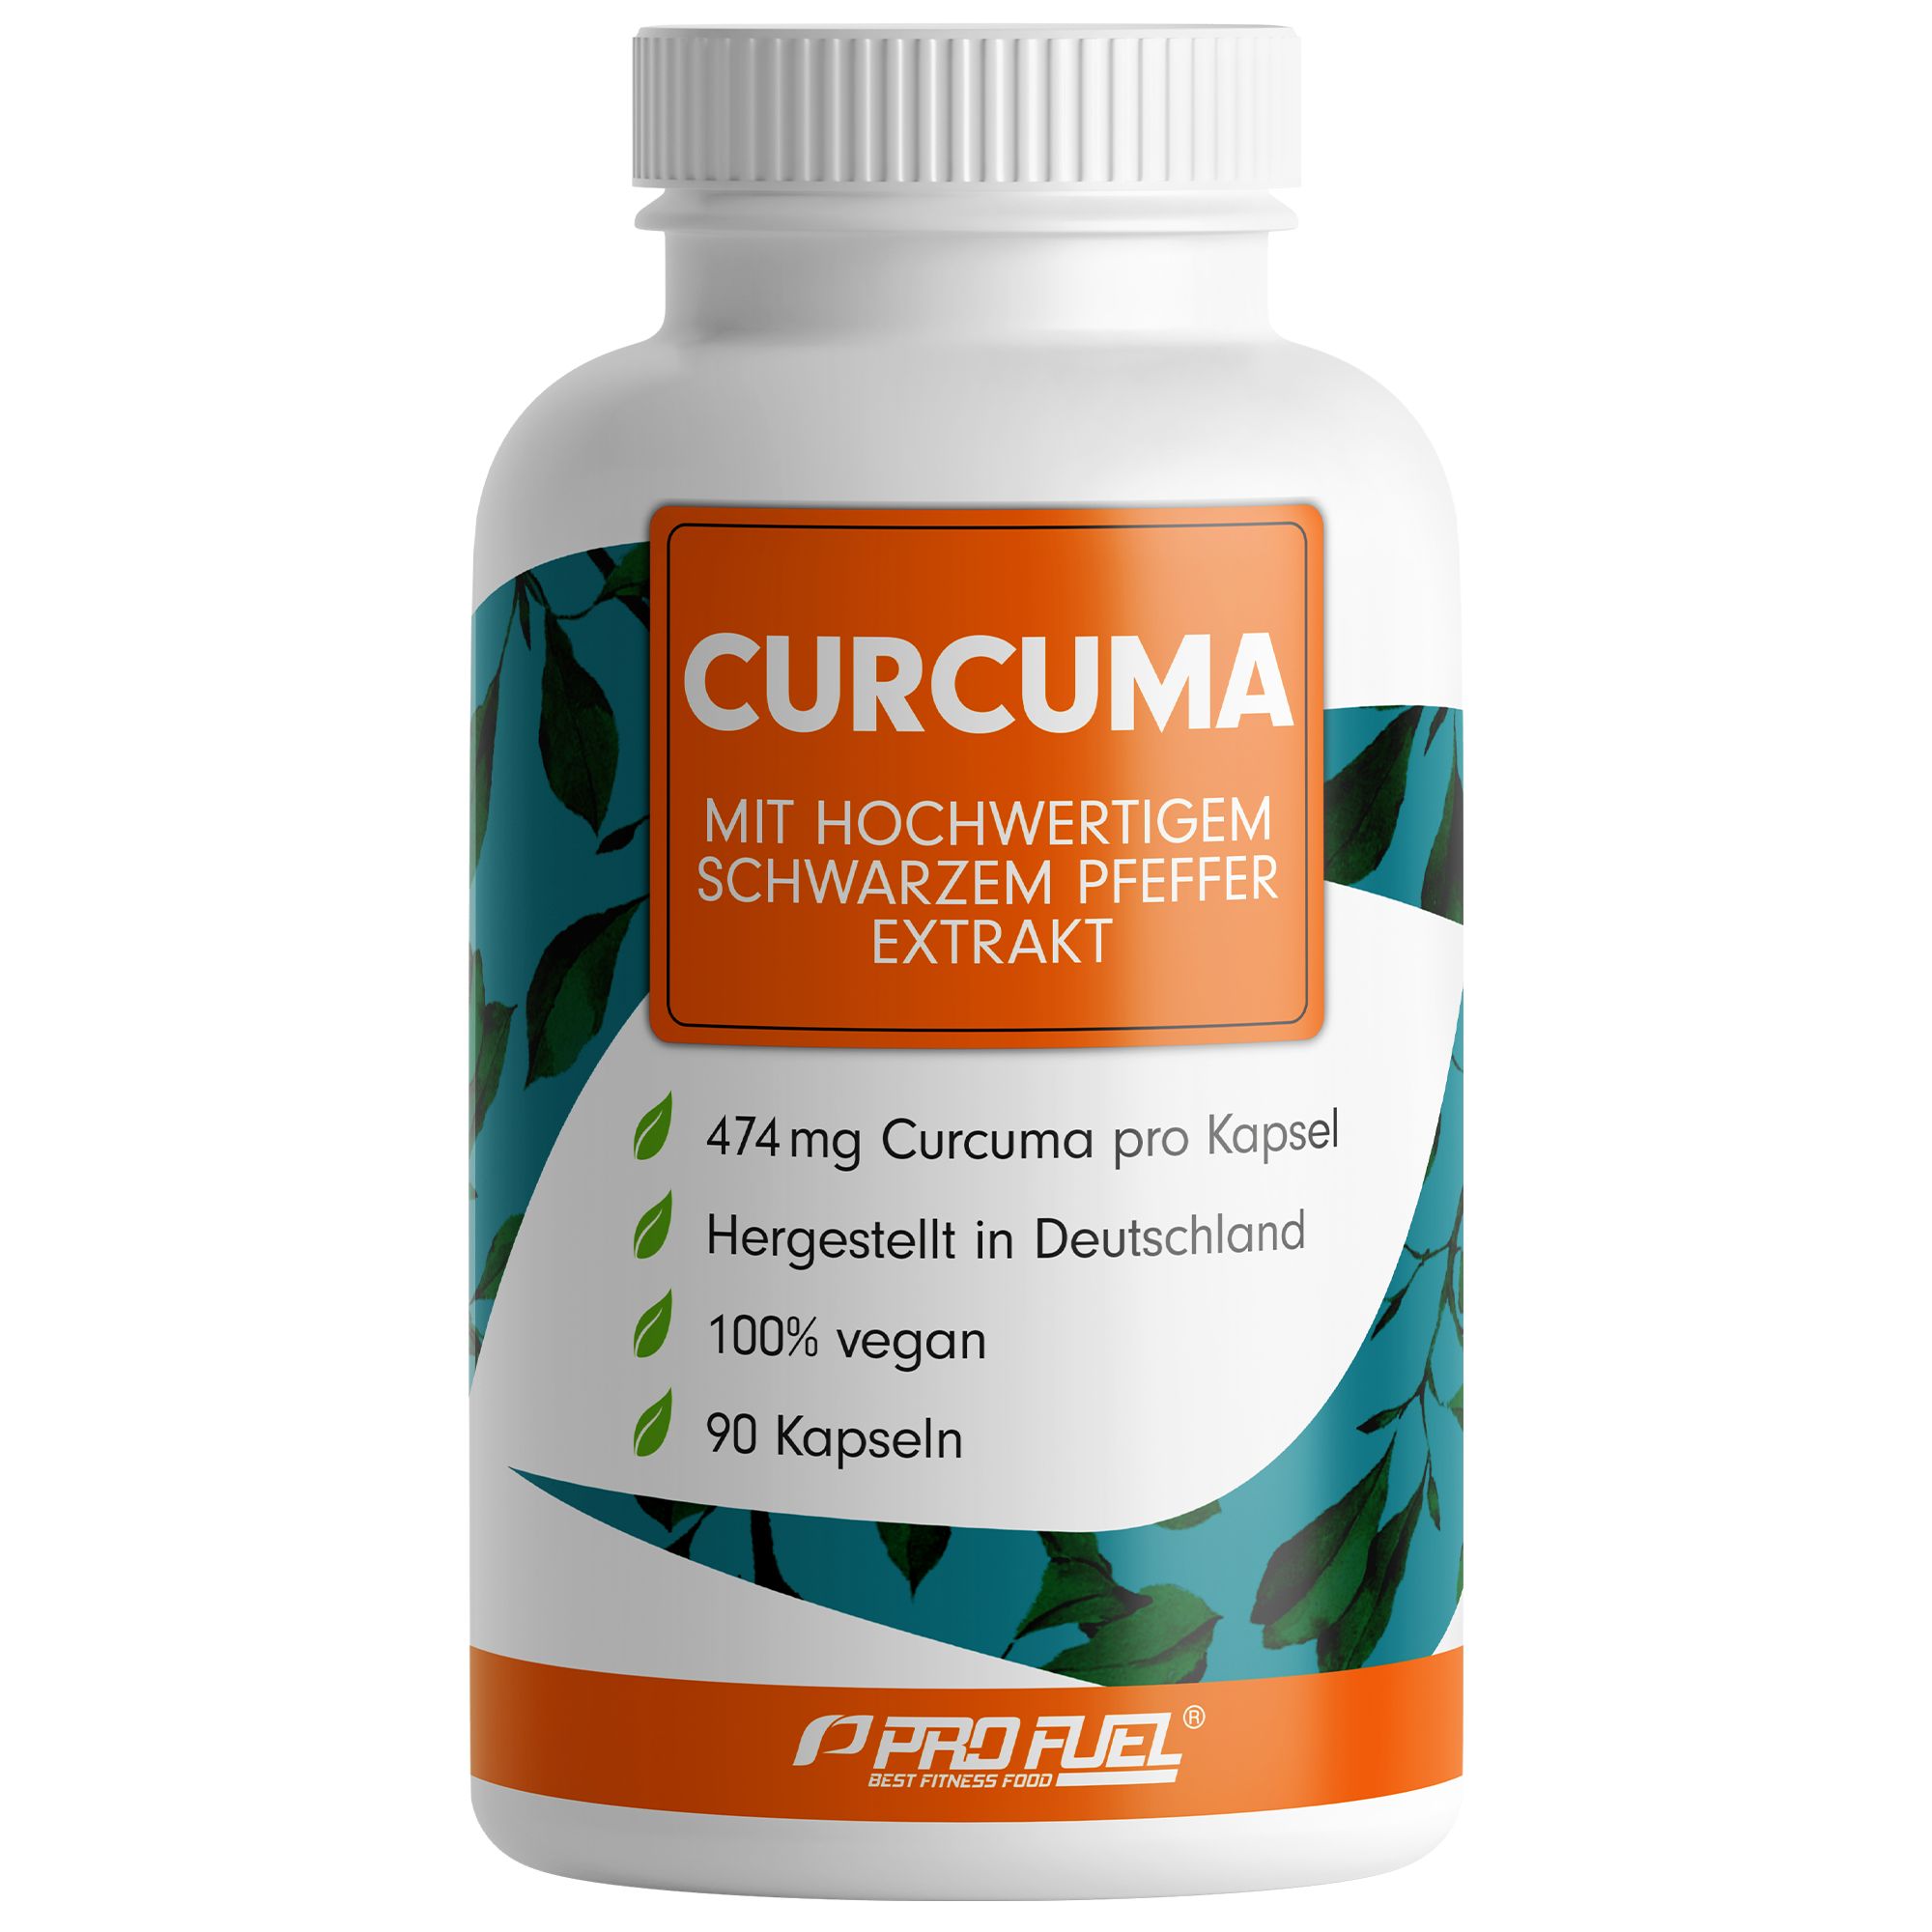 ProFuel - Curcuma Kapseln mit 474mg Curcuma-Extrakt pro Kapsel, davon 450mg wertvolle Curcuminoide